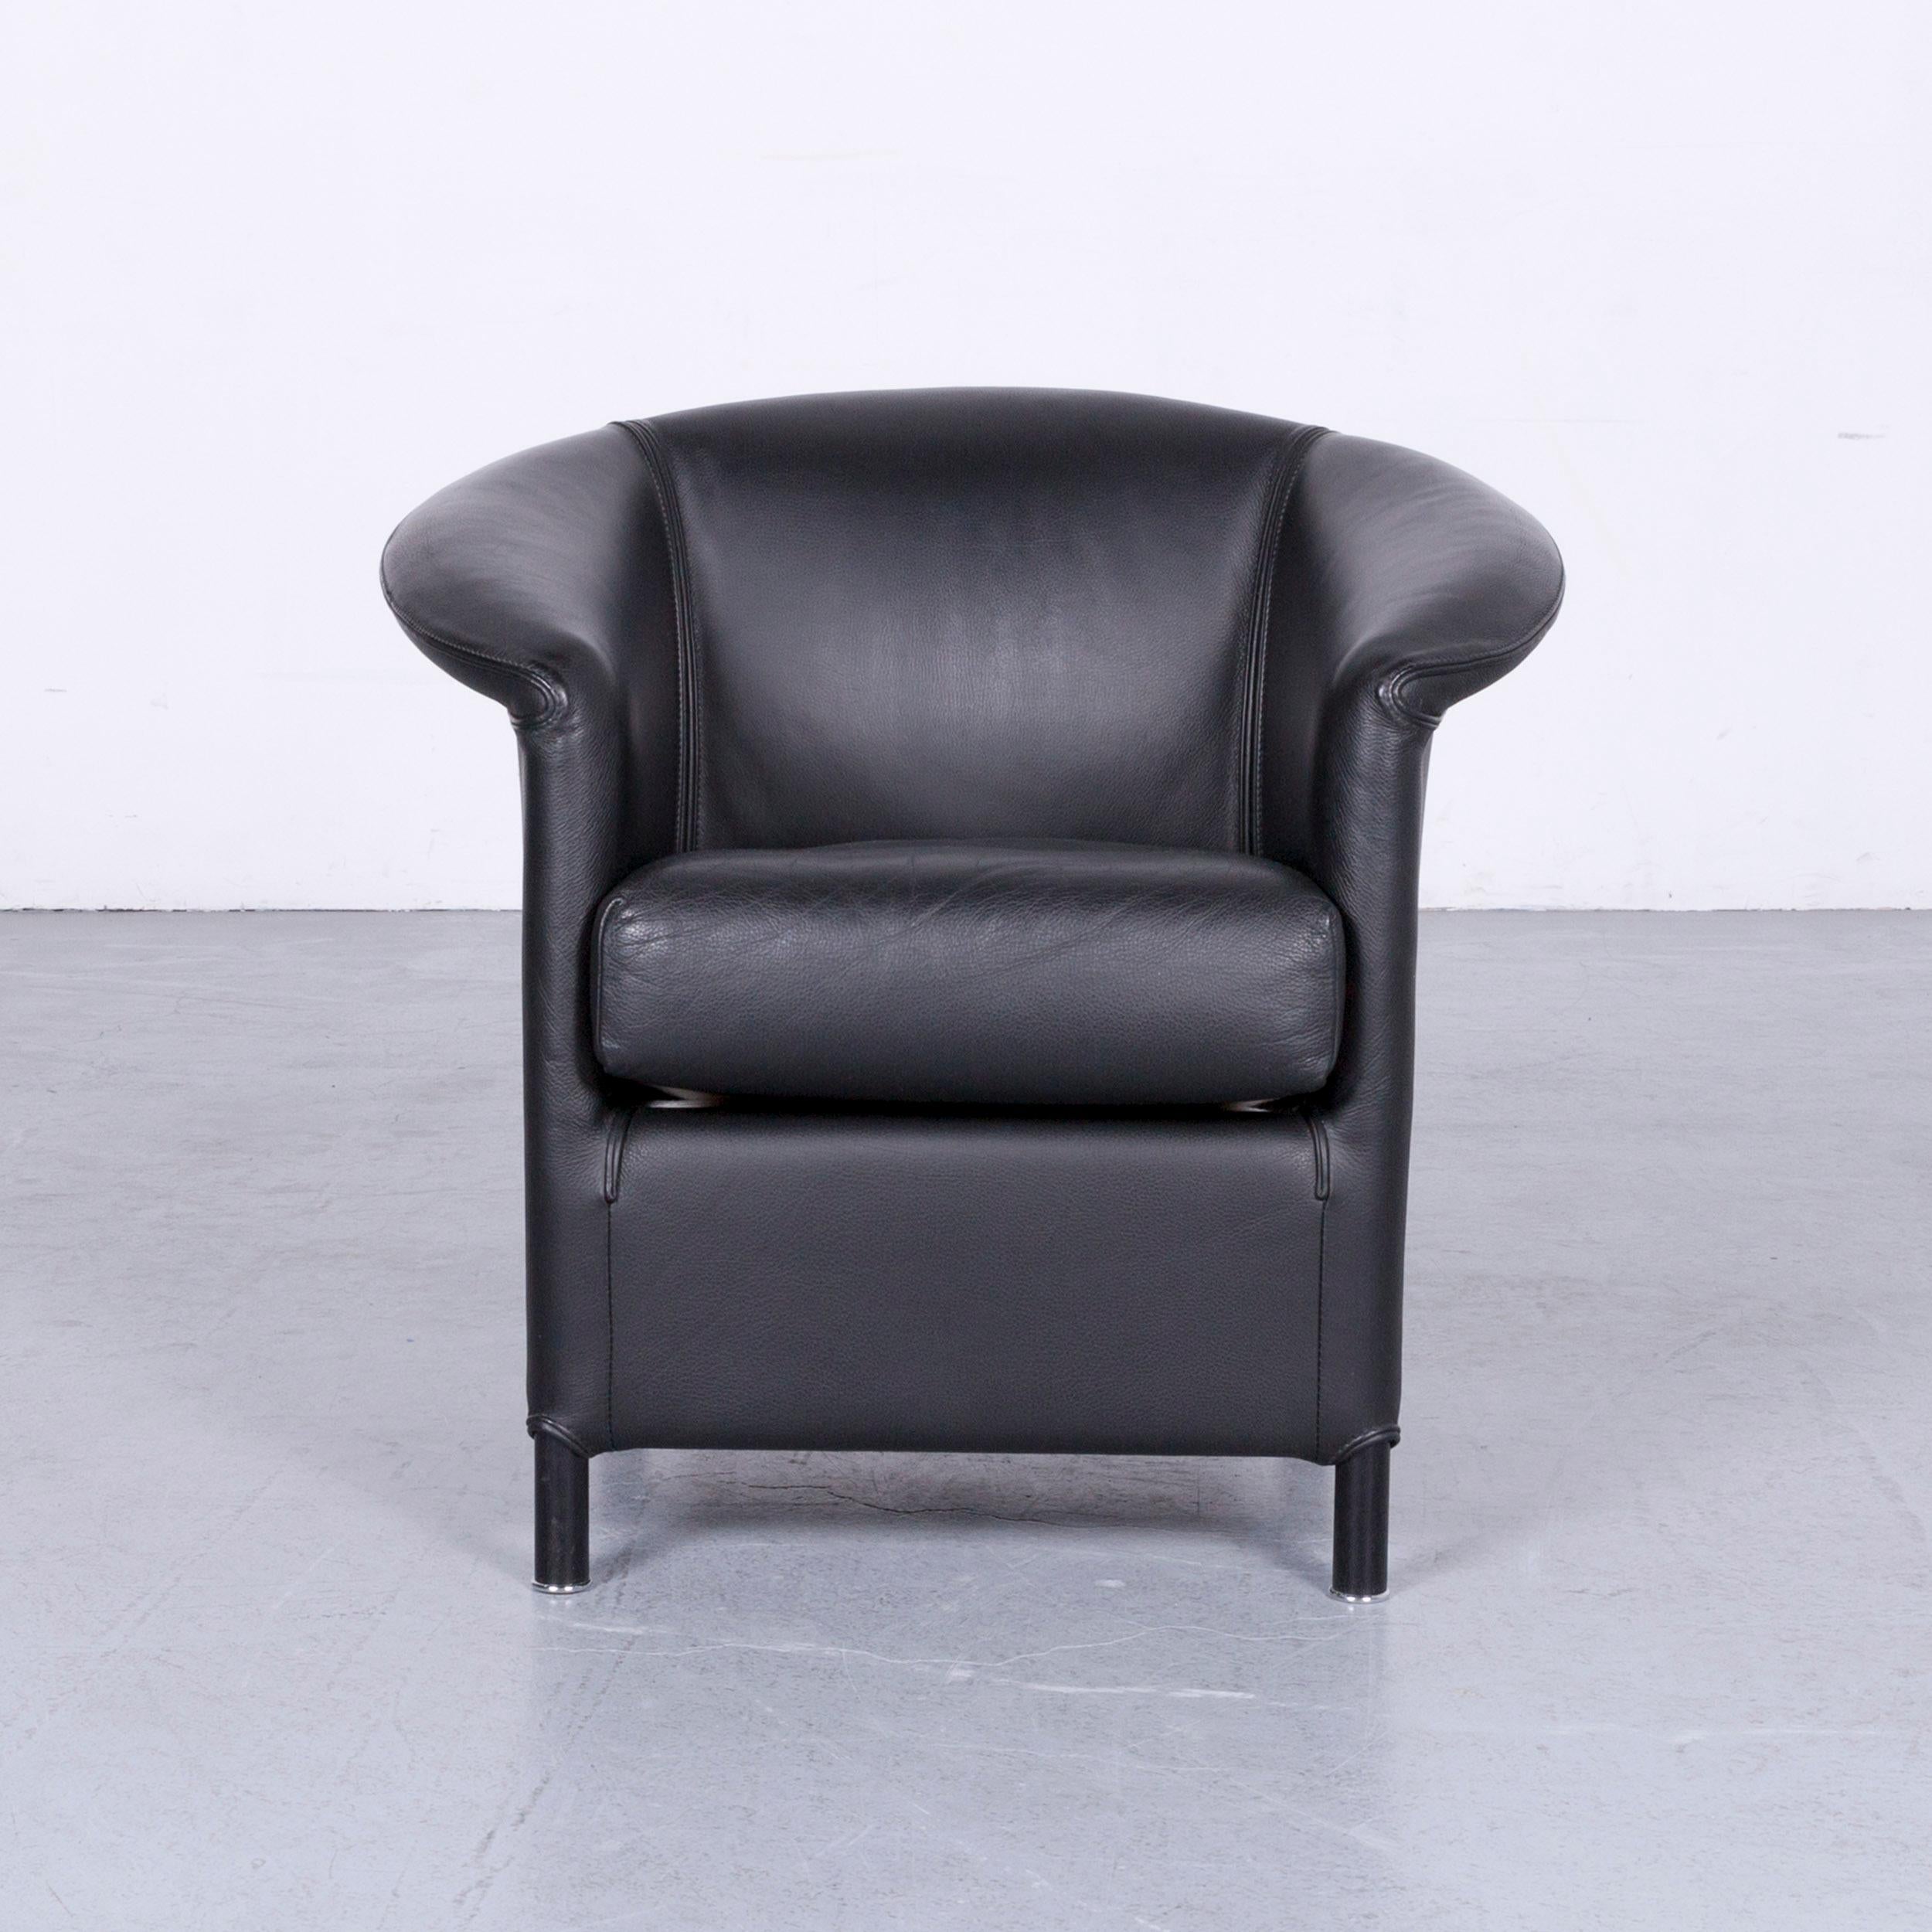 We bring to you an Wittmann Aura designer leather armchair black club-chair.